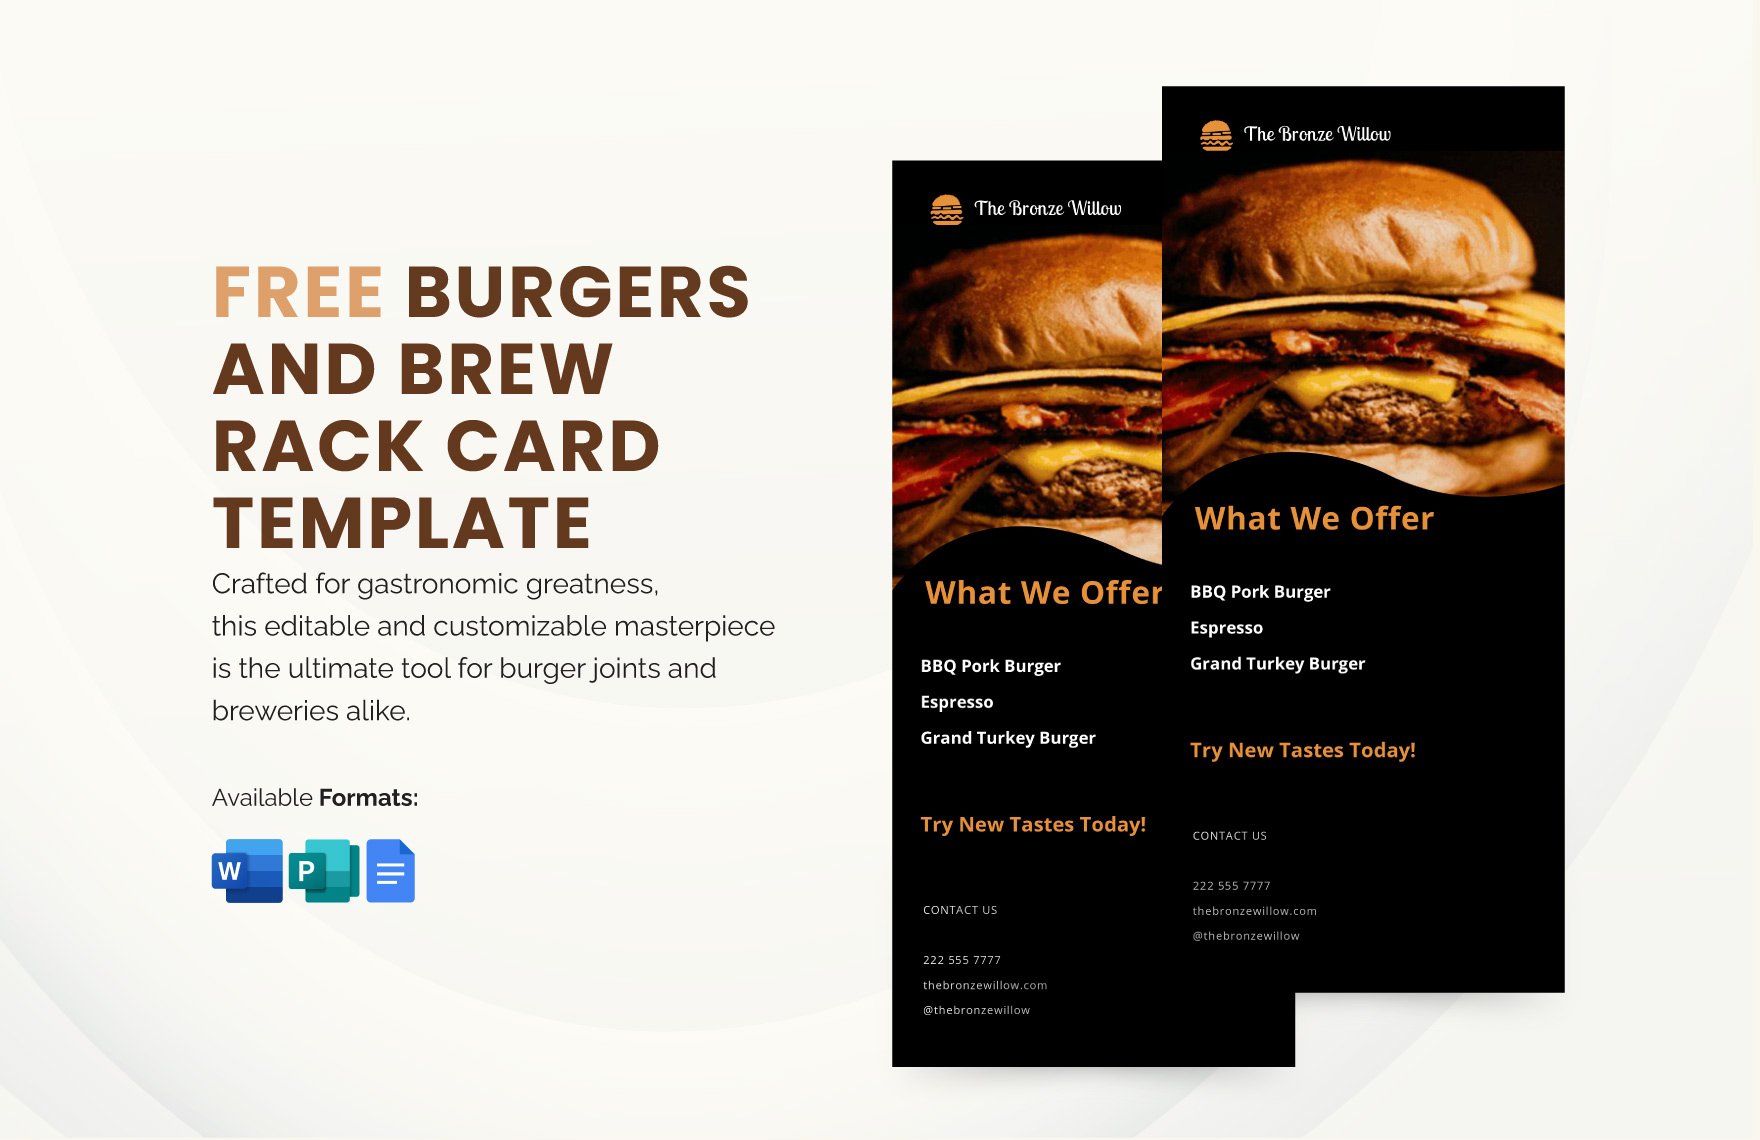 Burgers and Brews Rack Card Template